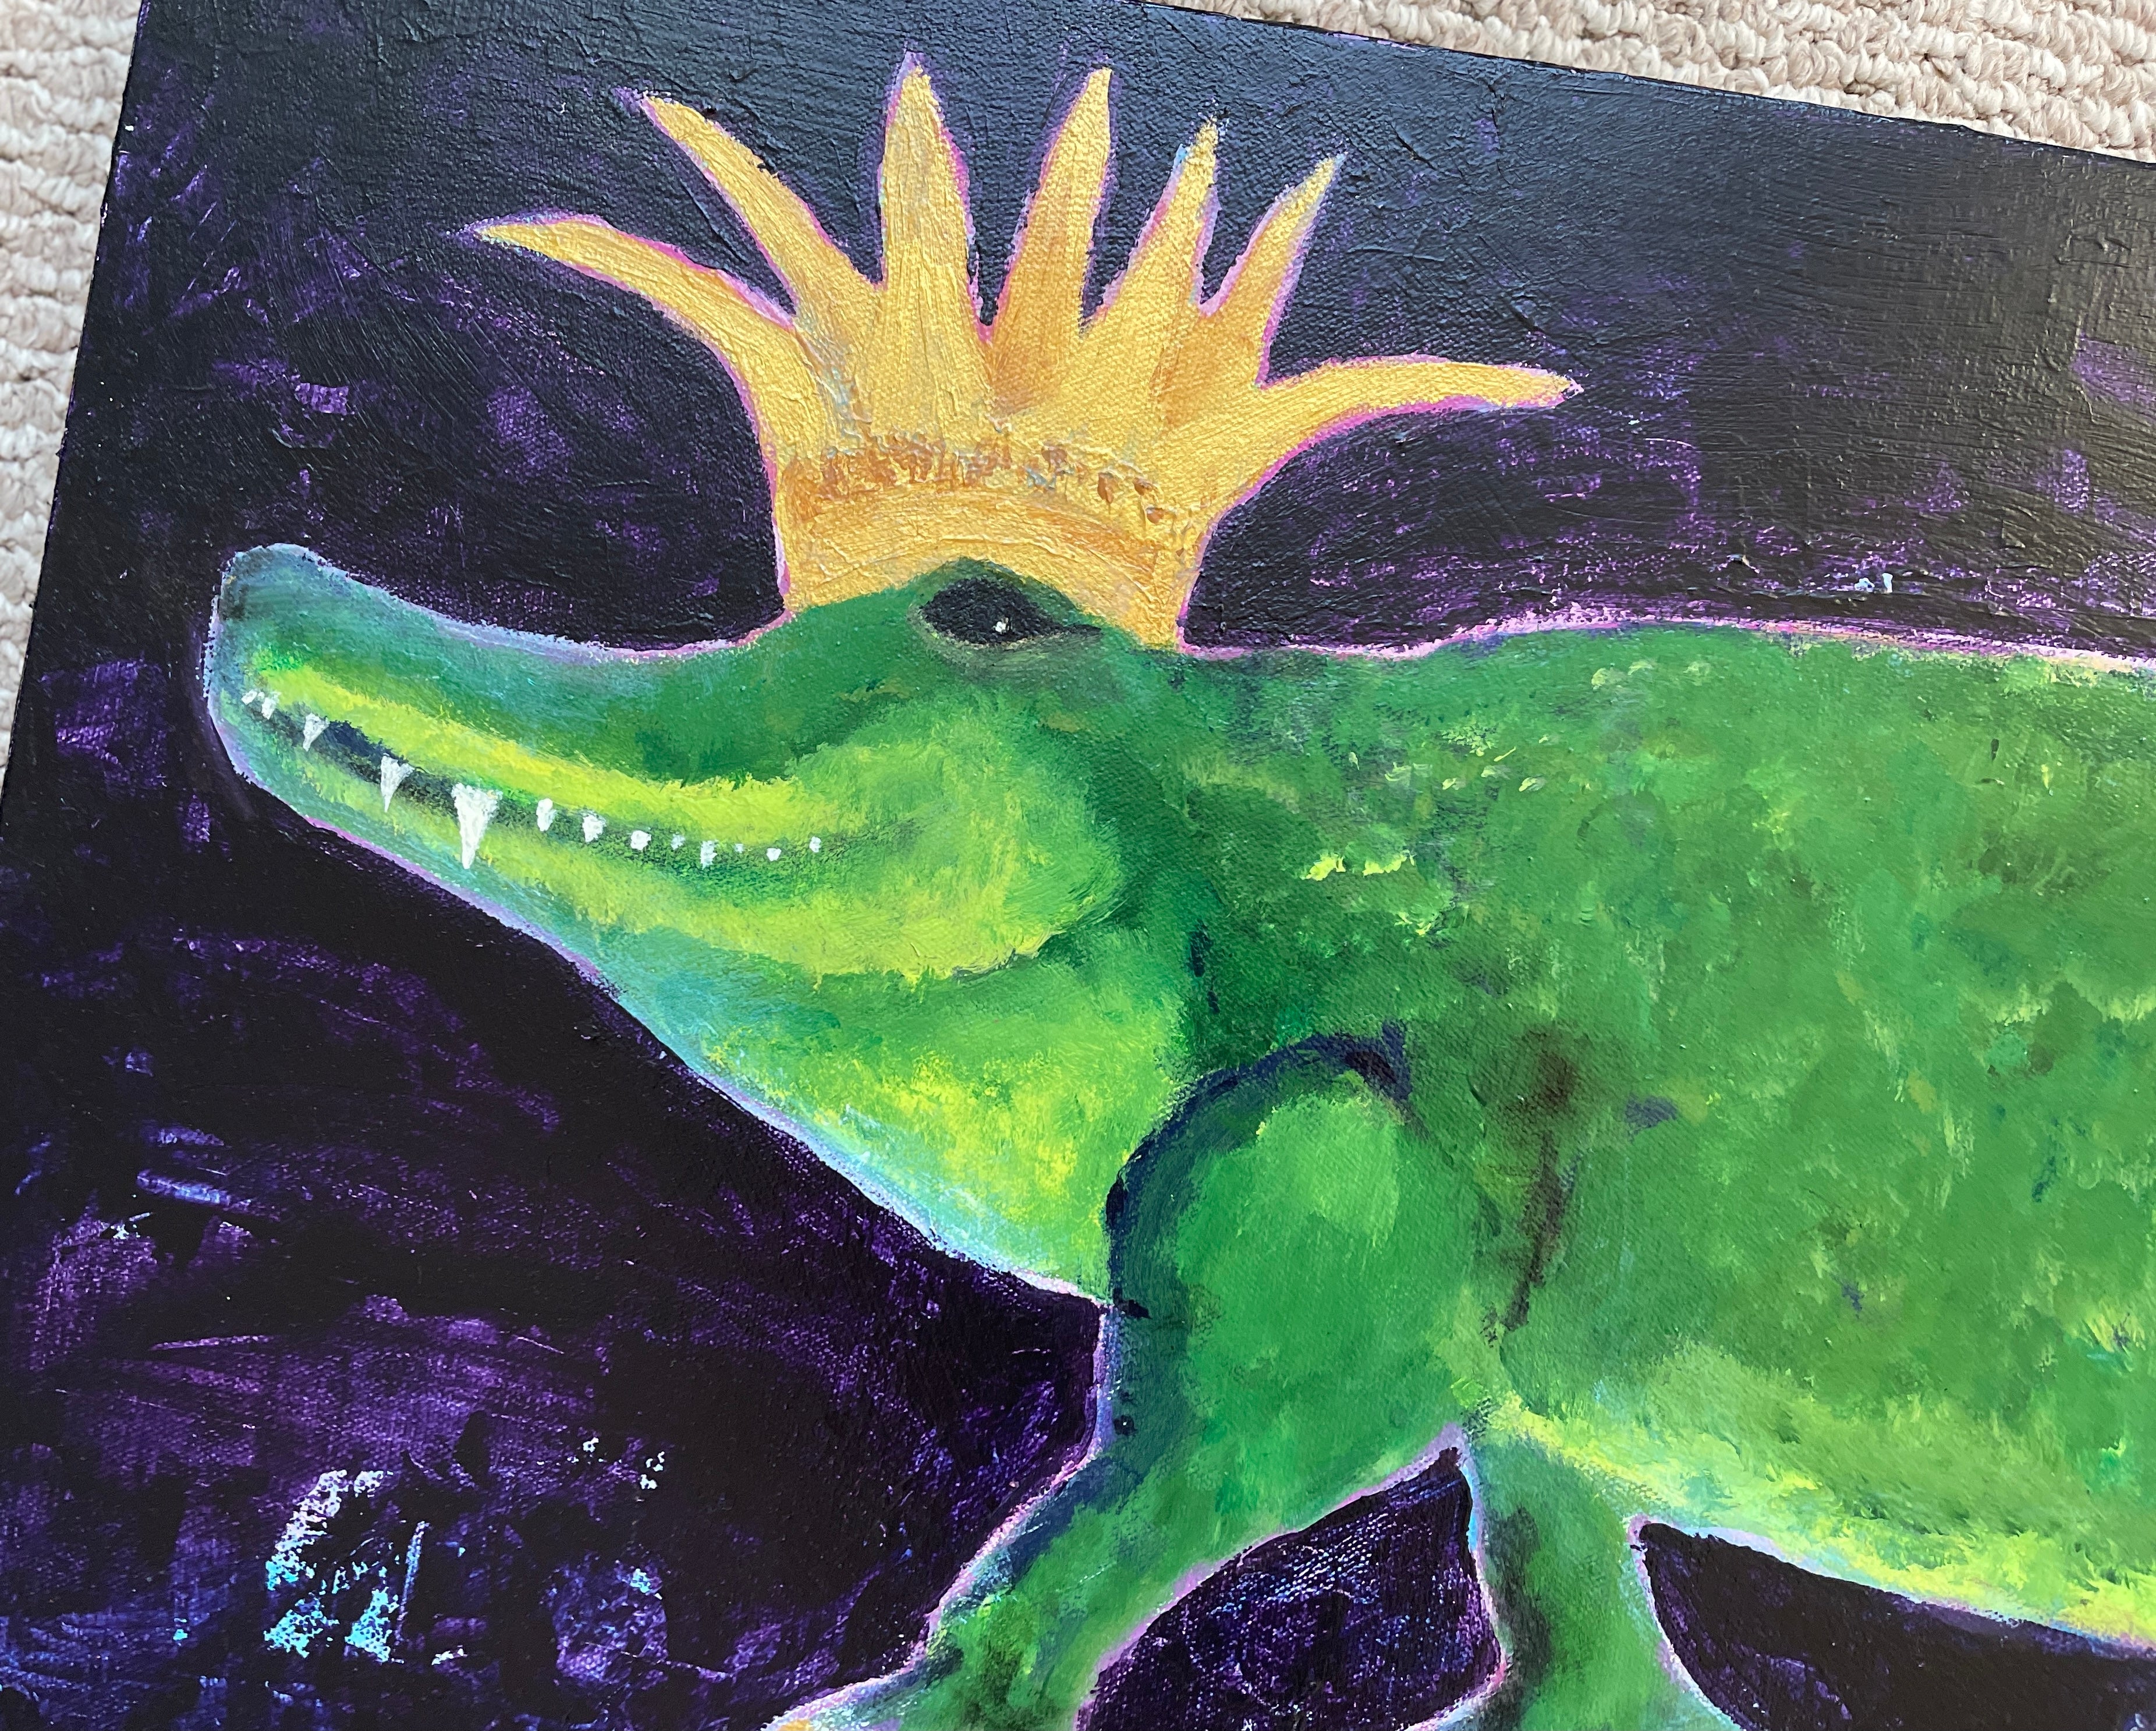 Royal Alligator, King of Mardi Gras; acrylic painting